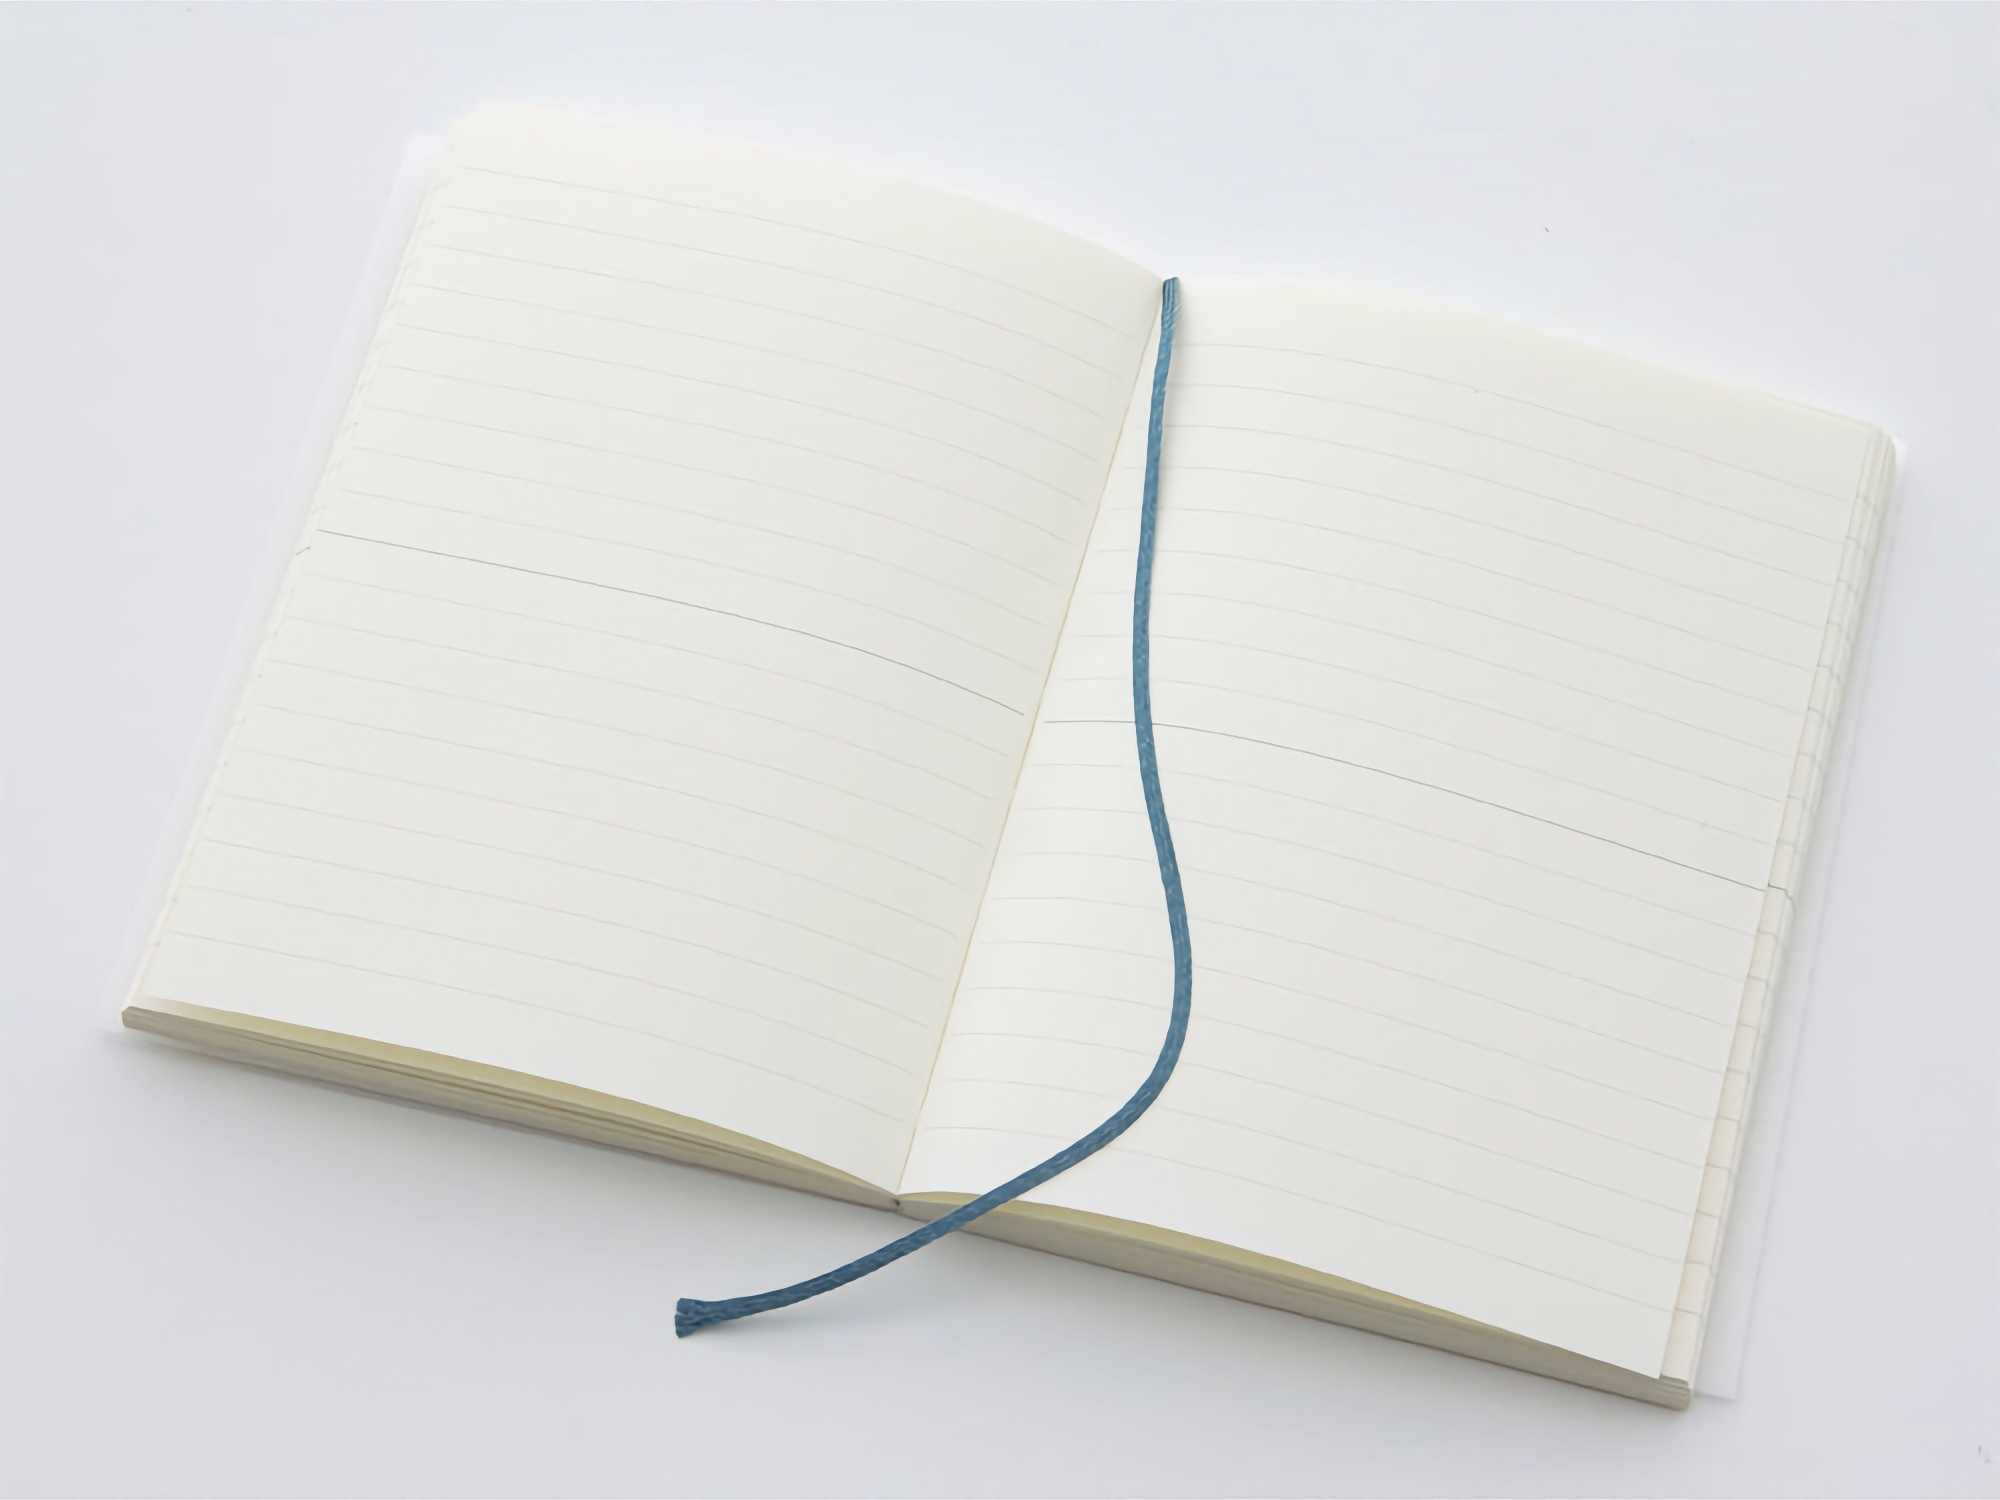 Midori MD Notebook [A6] Linjerad